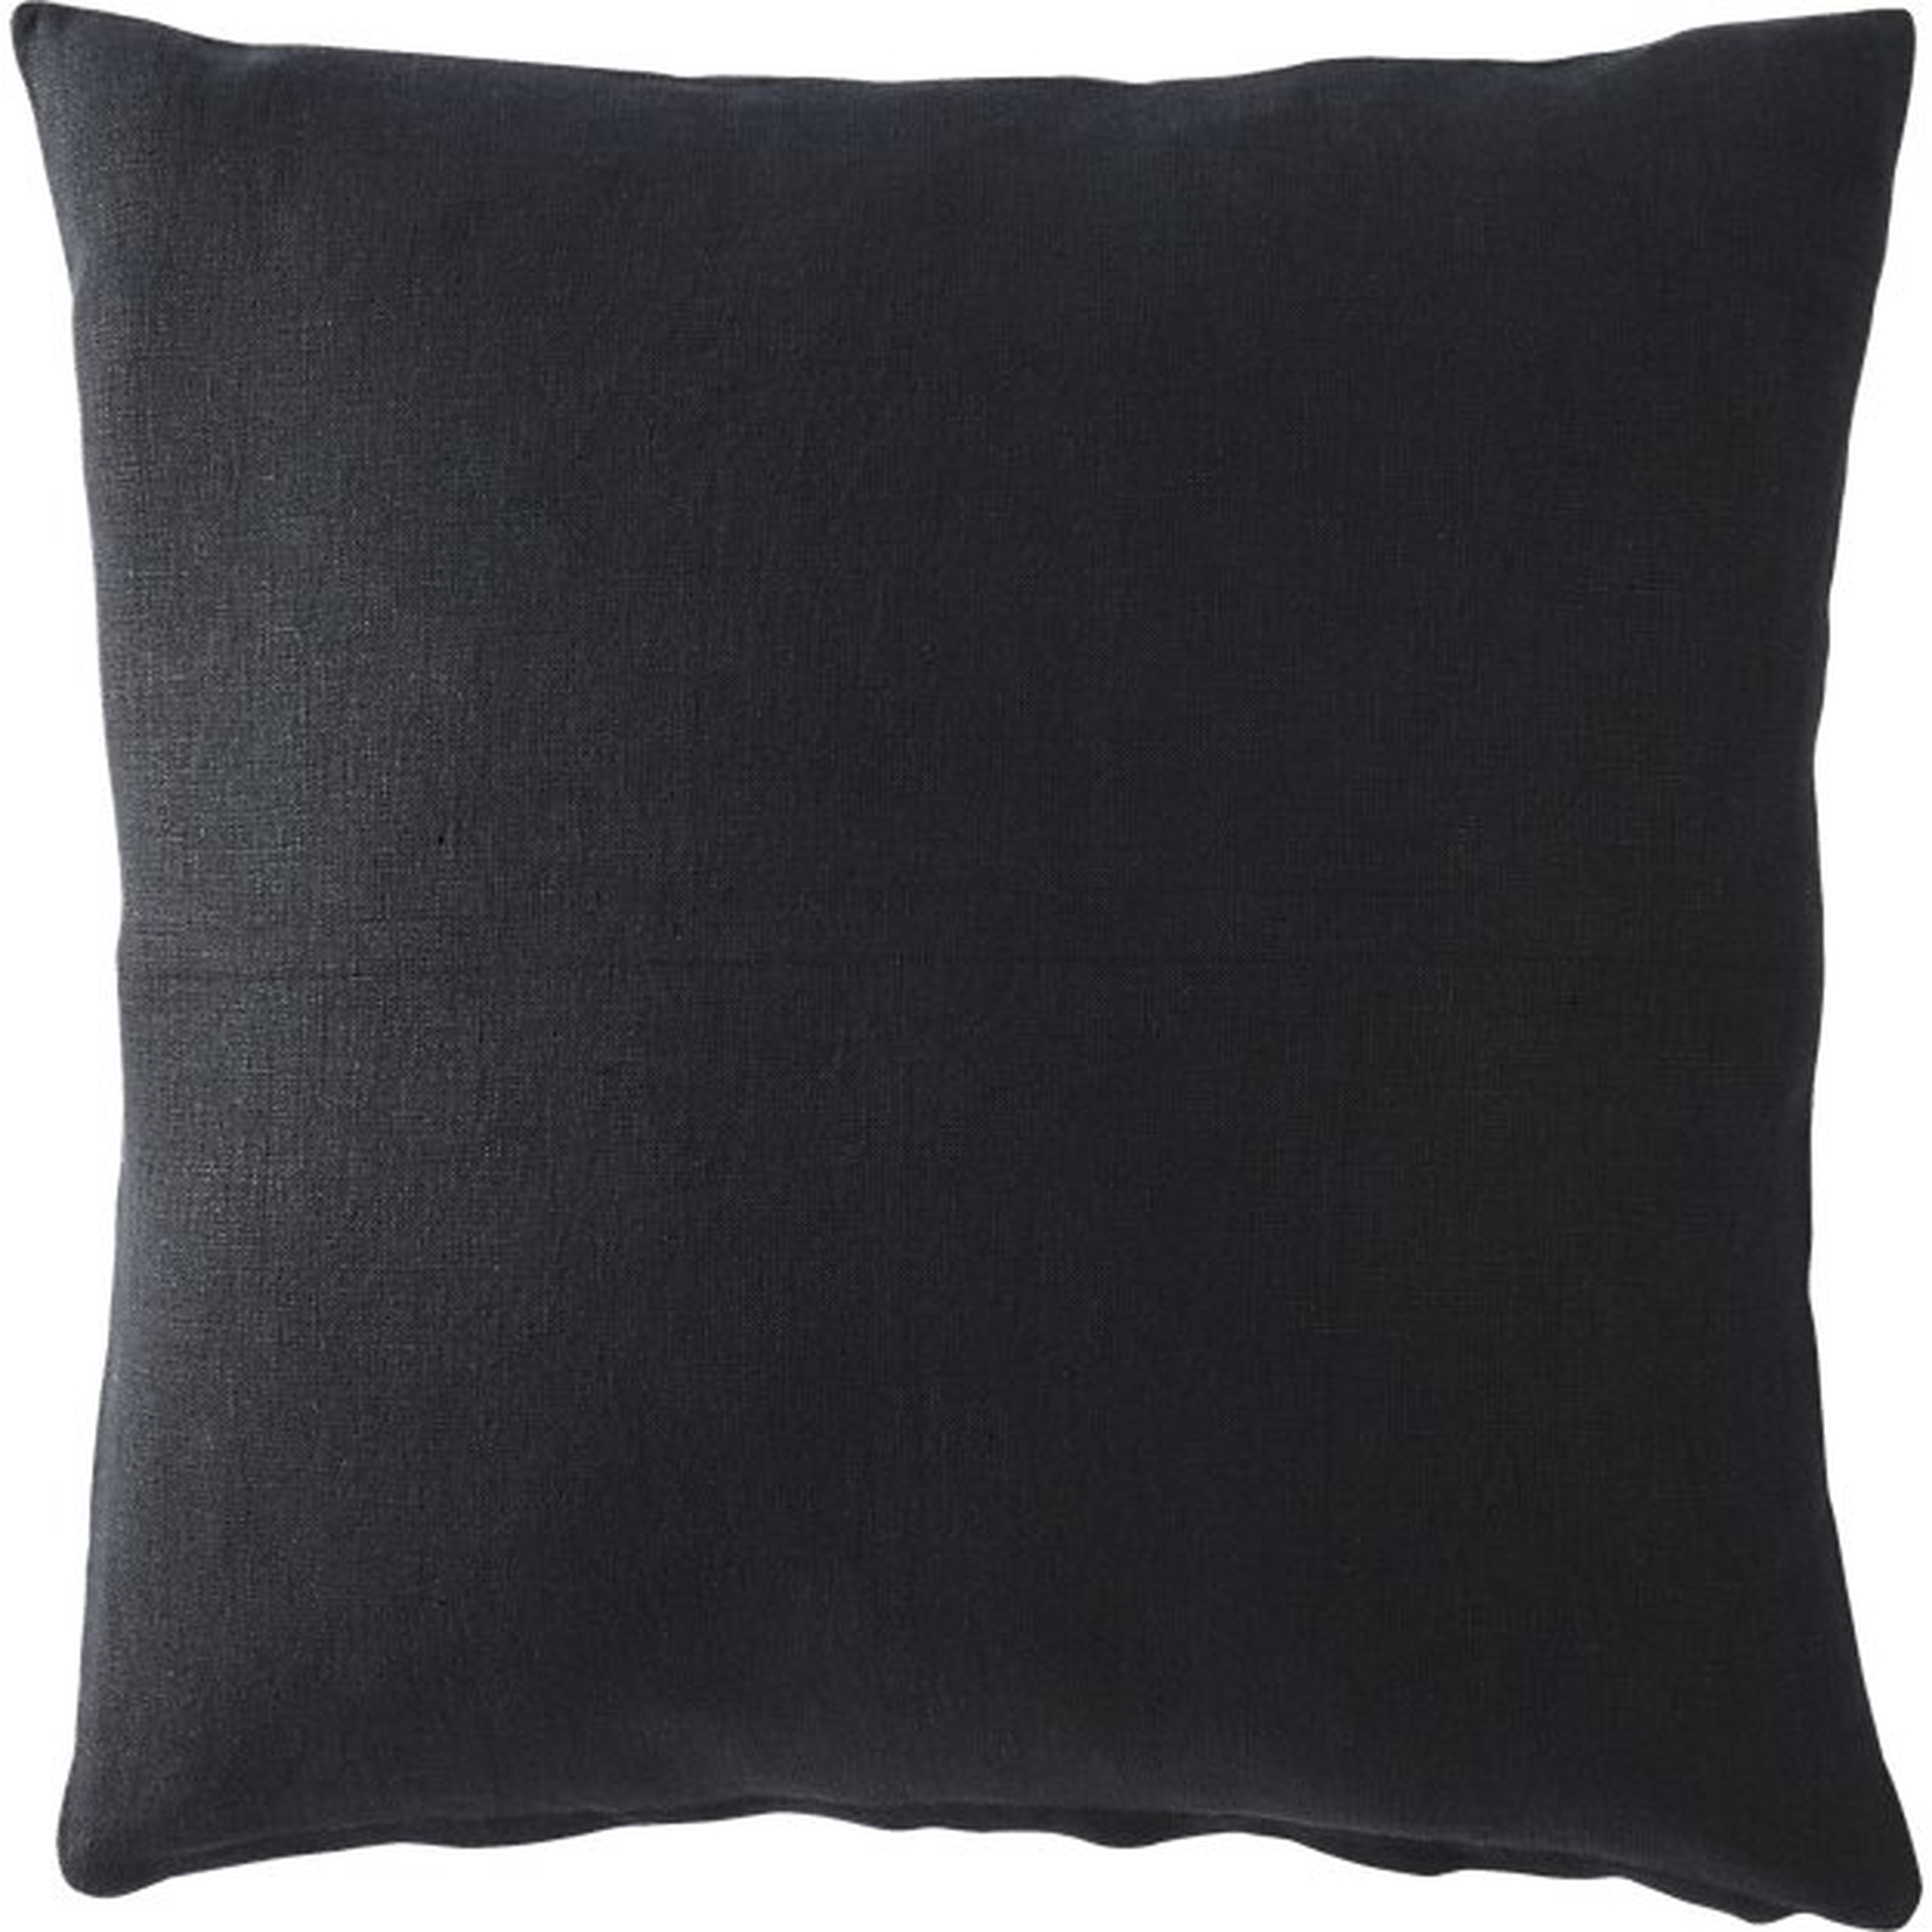 Linon pillow - with down-alternative insert - CB2